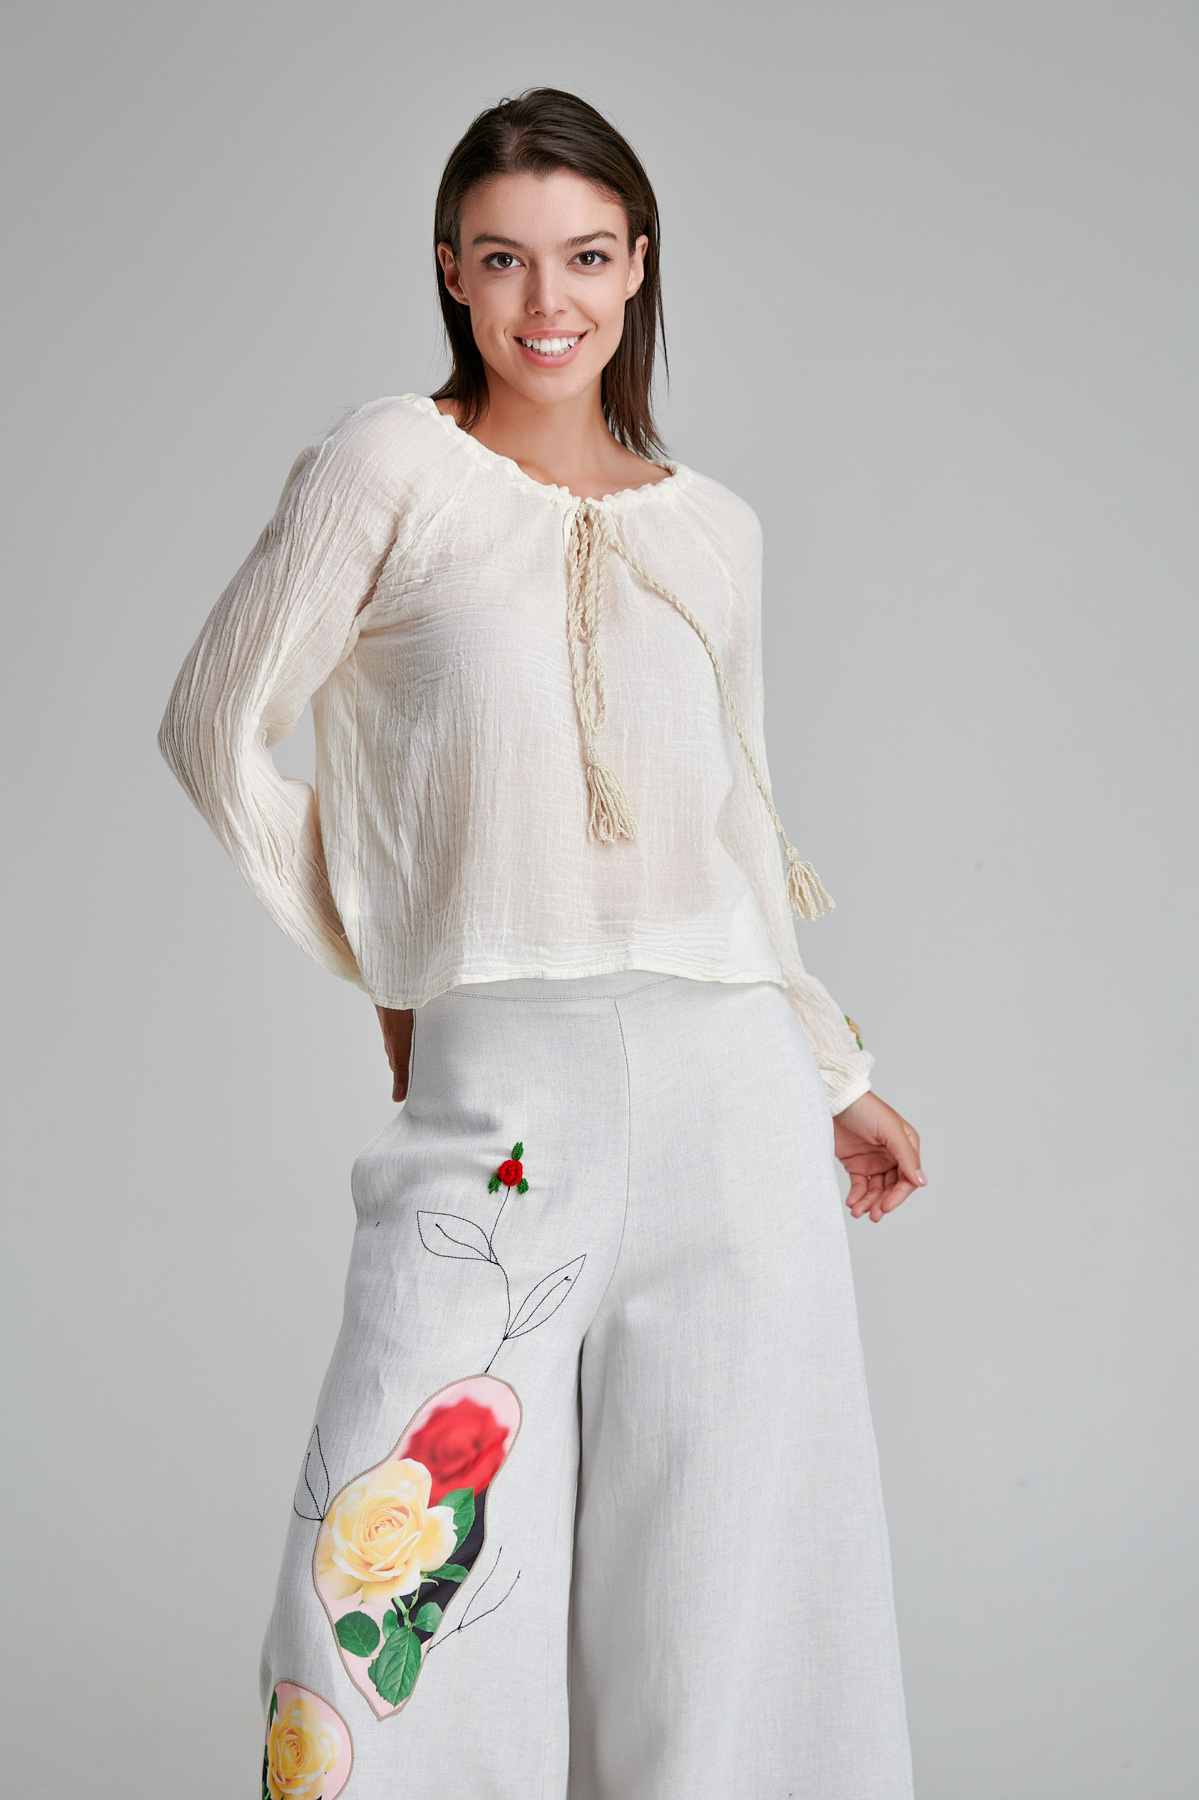 ROSE blouse made of natural linen fabric. Natural fabrics, original design, handmade embroidery